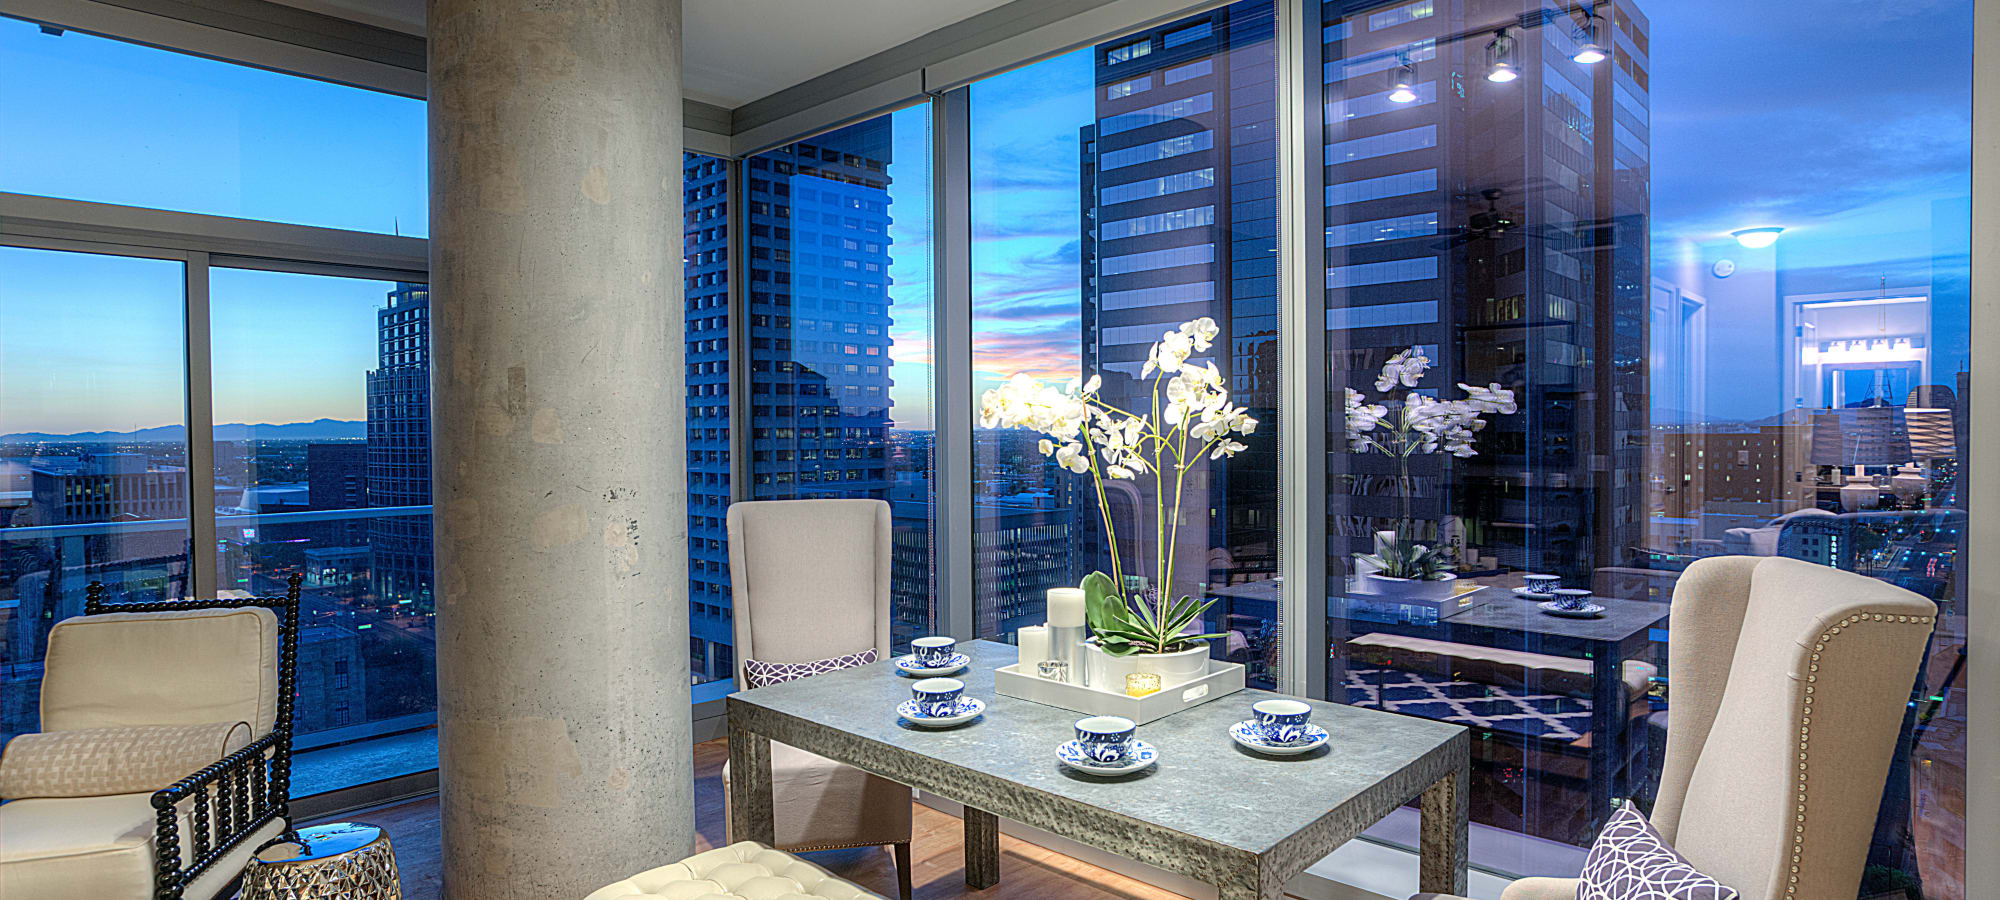 Enjoy apartments with city views at CityScape Residences in Phoenix, Arizona